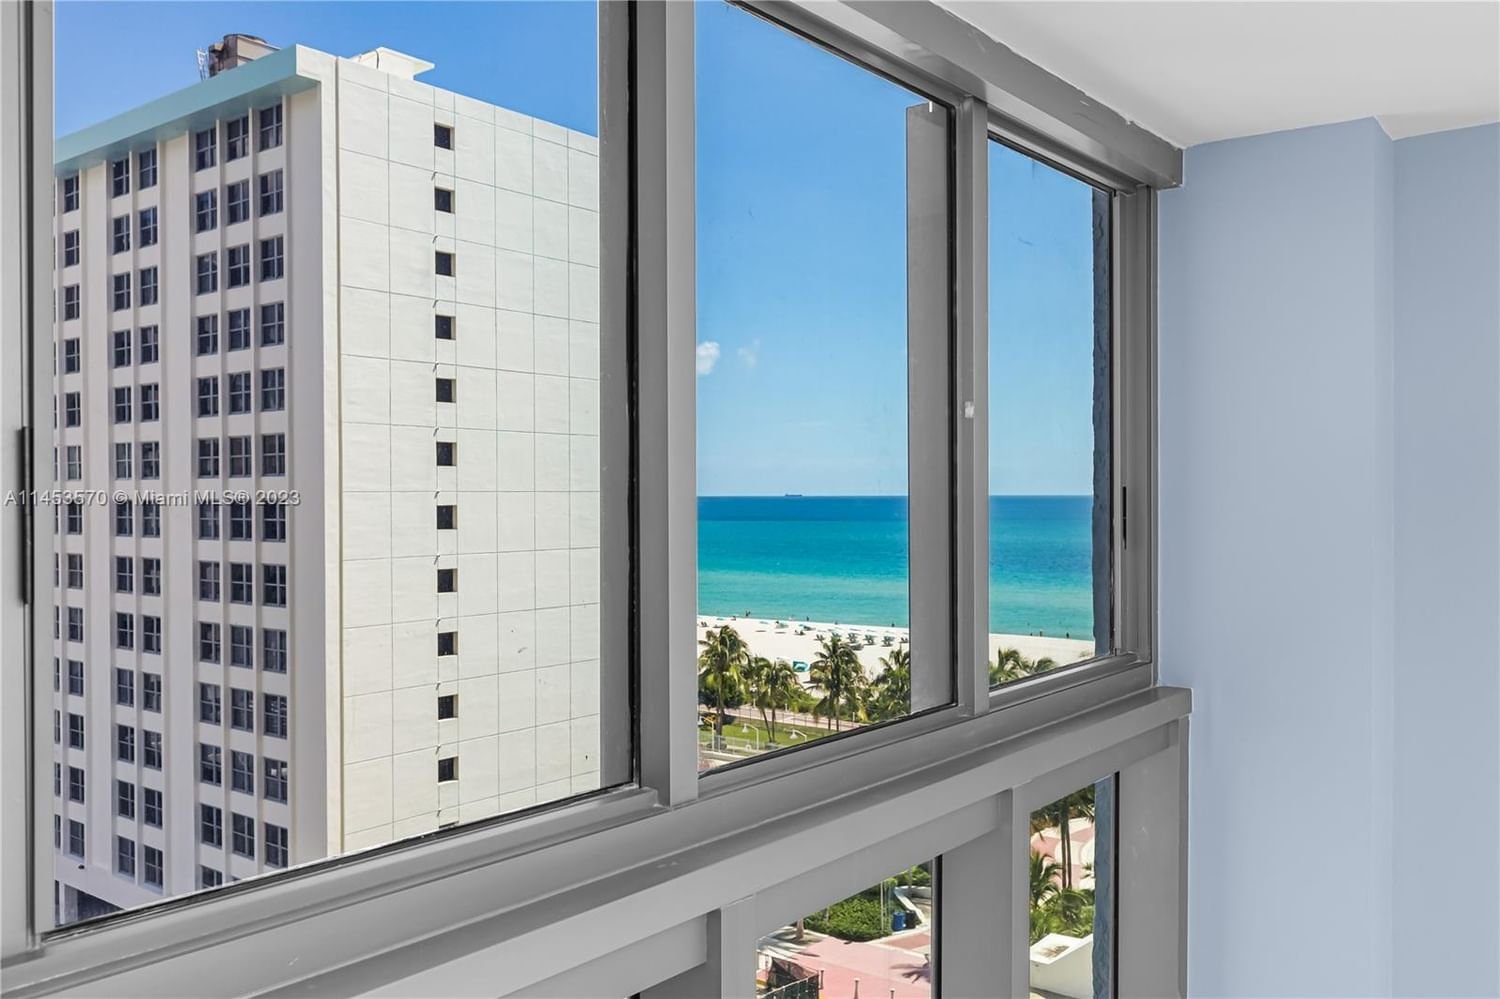 Real estate property located at 2655 Collins Ave #1103, Miami-Dade County, Miami Beach, FL